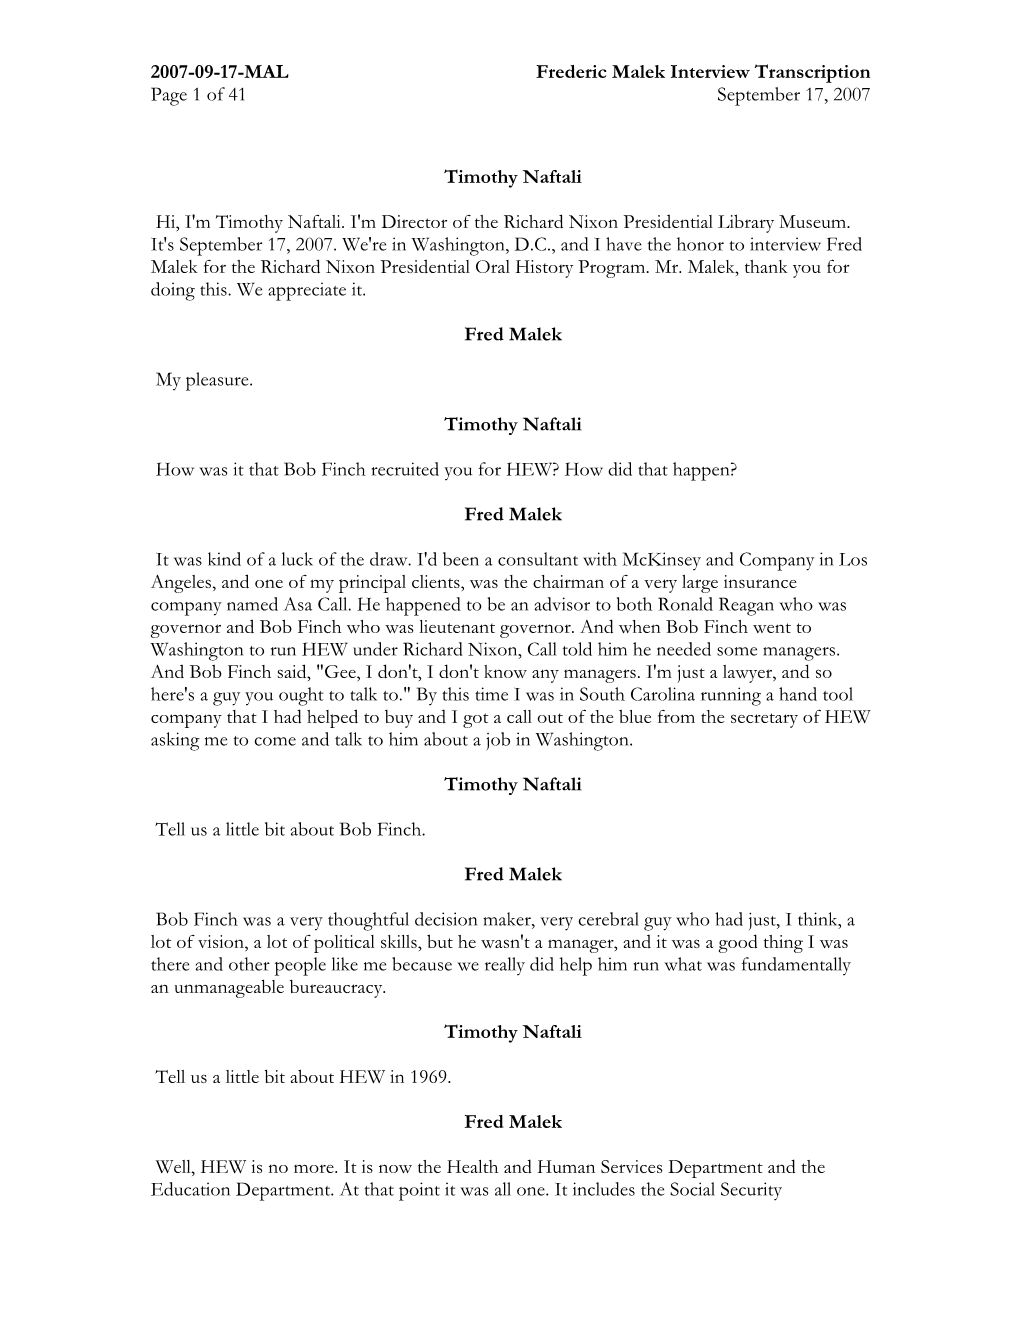 Transcription Page 1 of 41 September 17, 2007